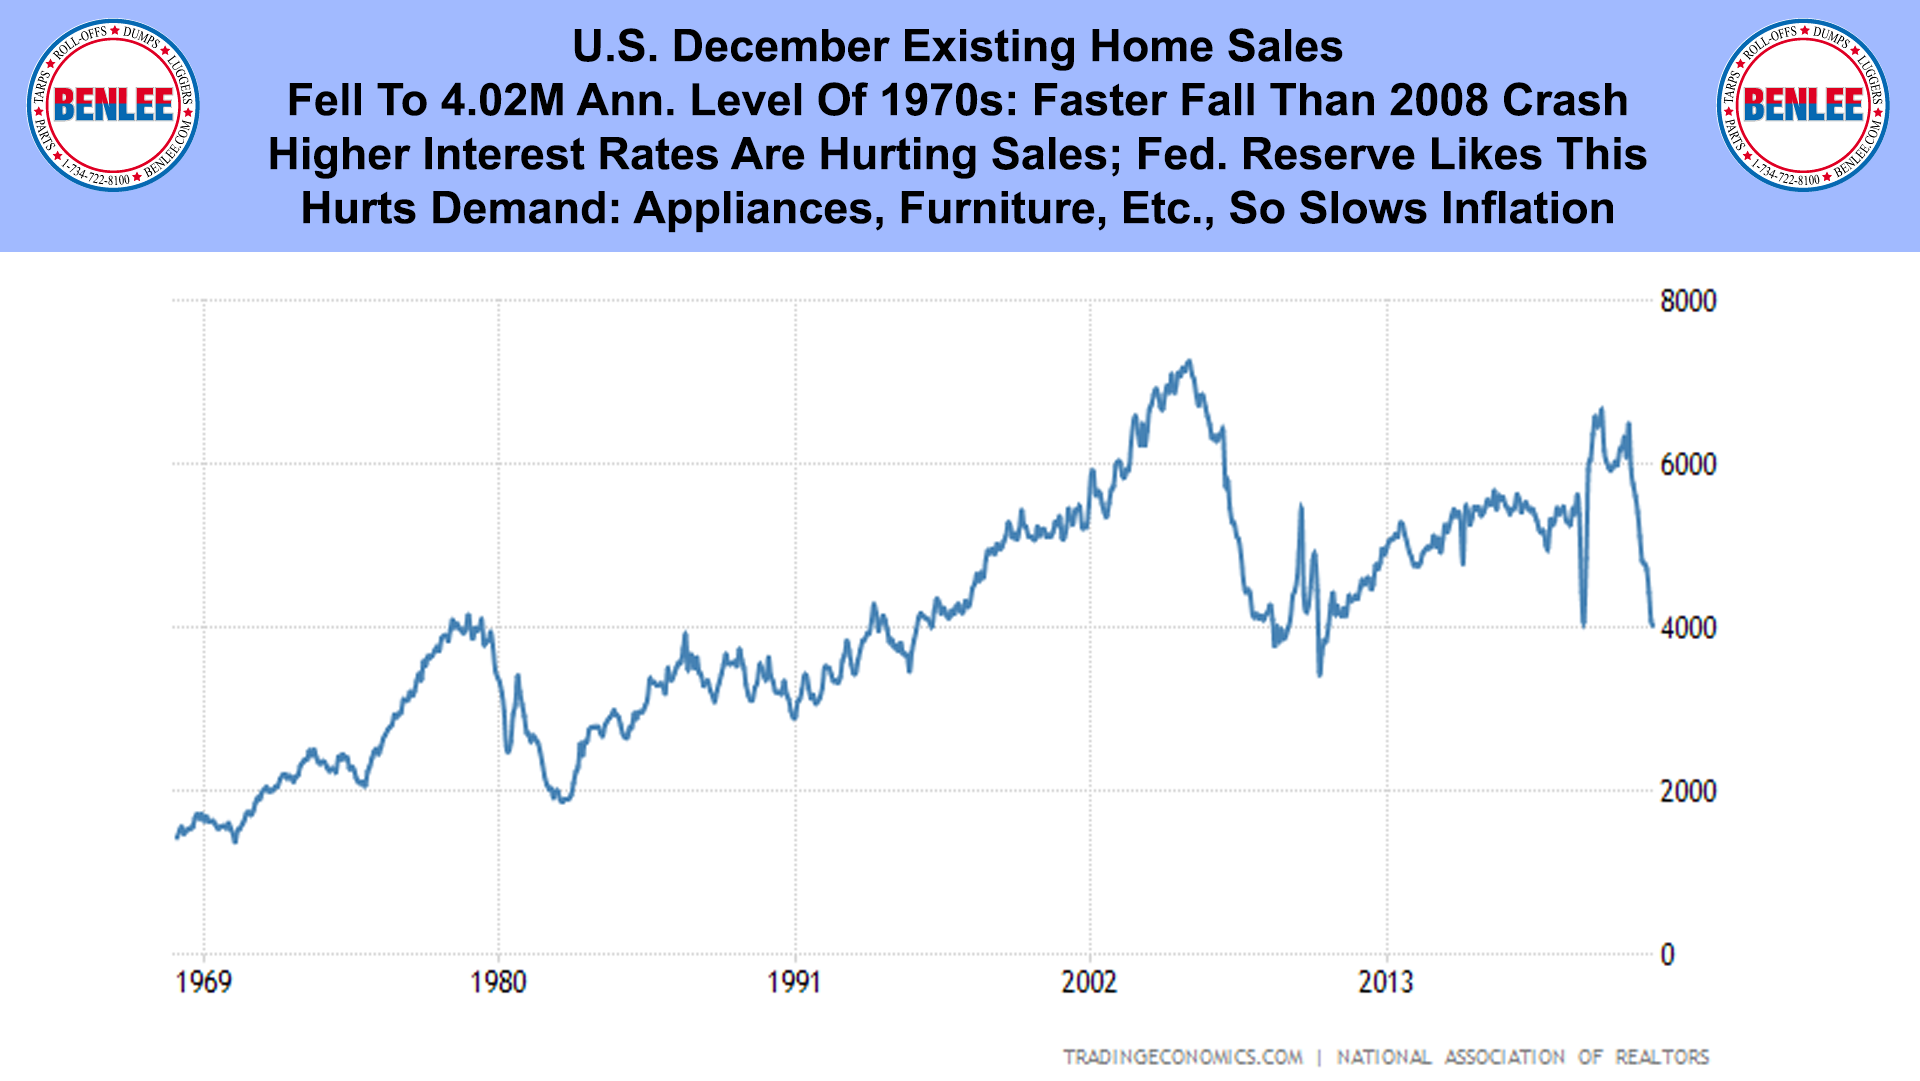 U.S. December Existing Home Sales